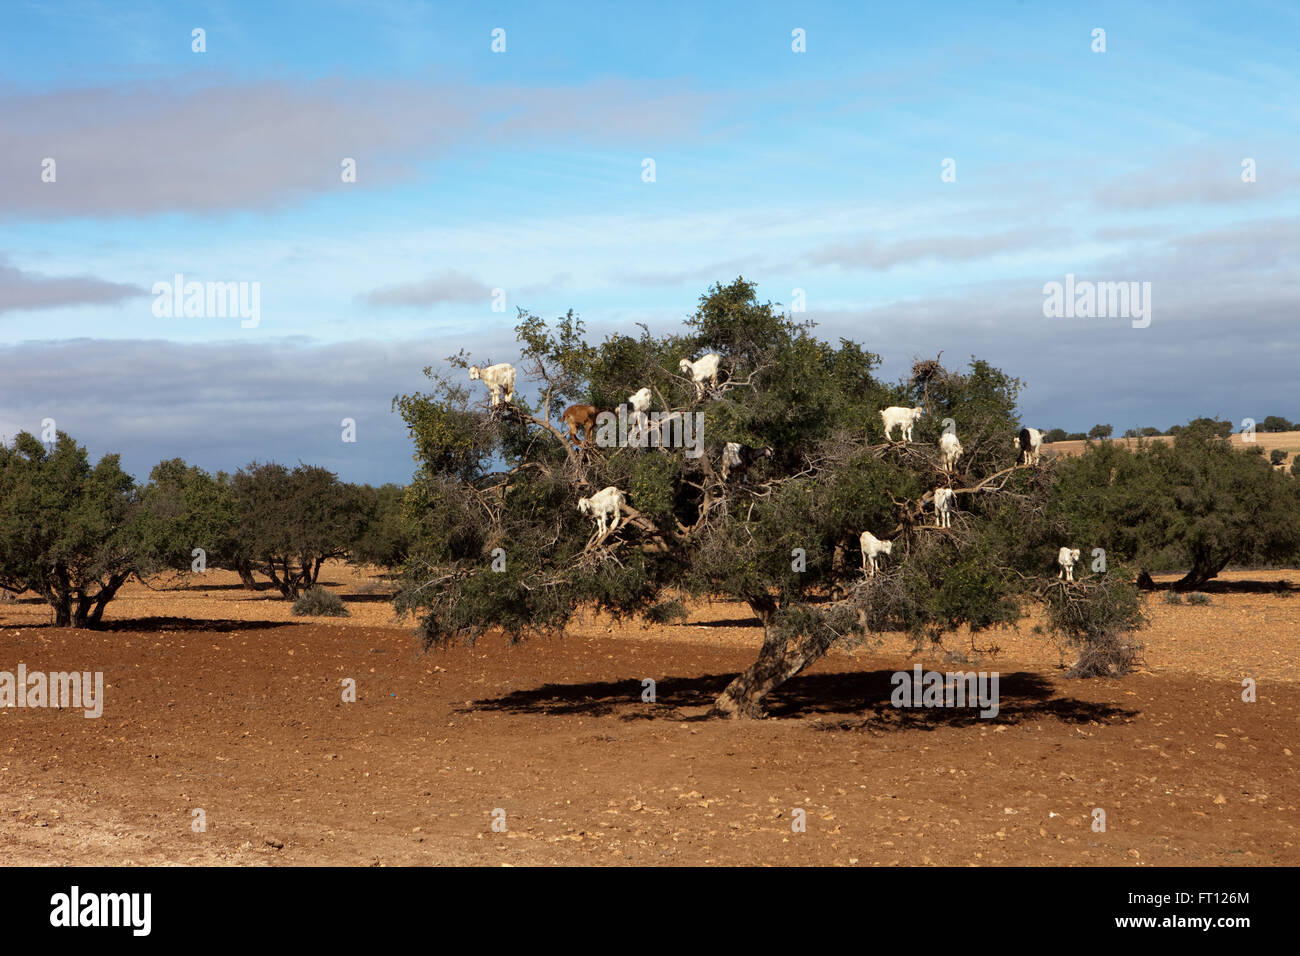 Herd of goats in an argan tree, Essaouira, Morocco Stock Photo